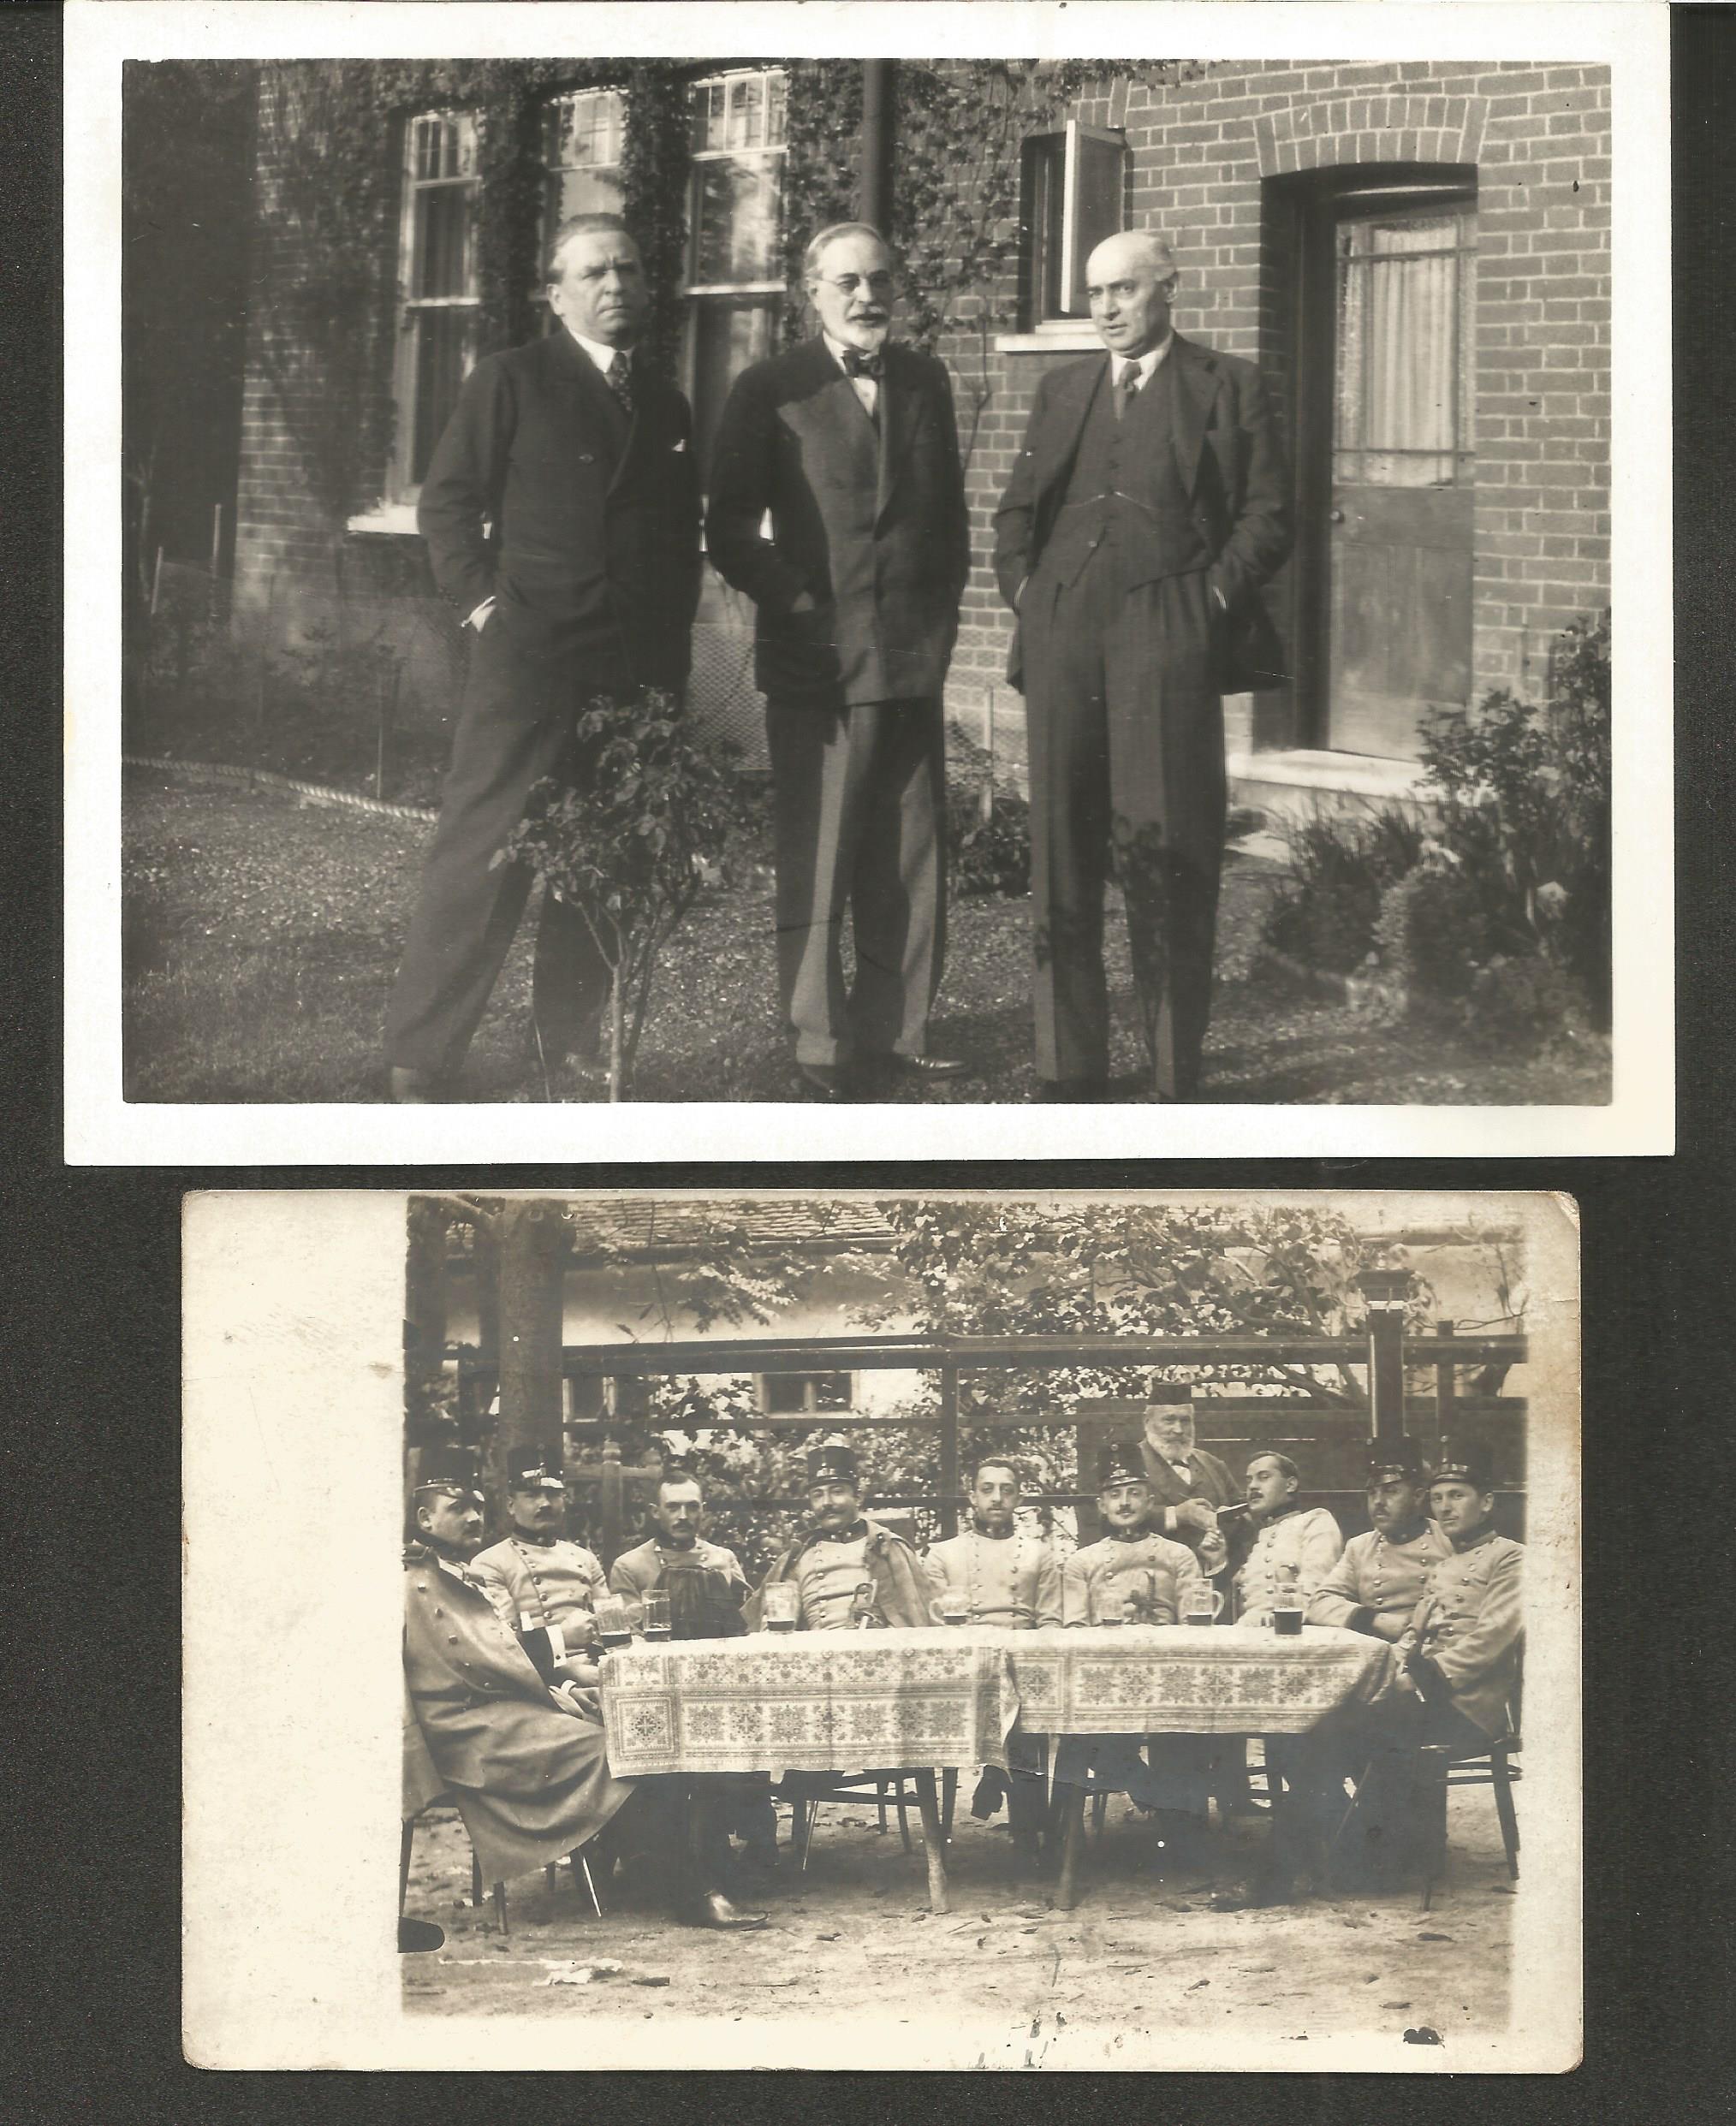 World war 1 photo album belonged to Gyula (Julius) Biro. Contains photos Austro Hungarian Monarchy's